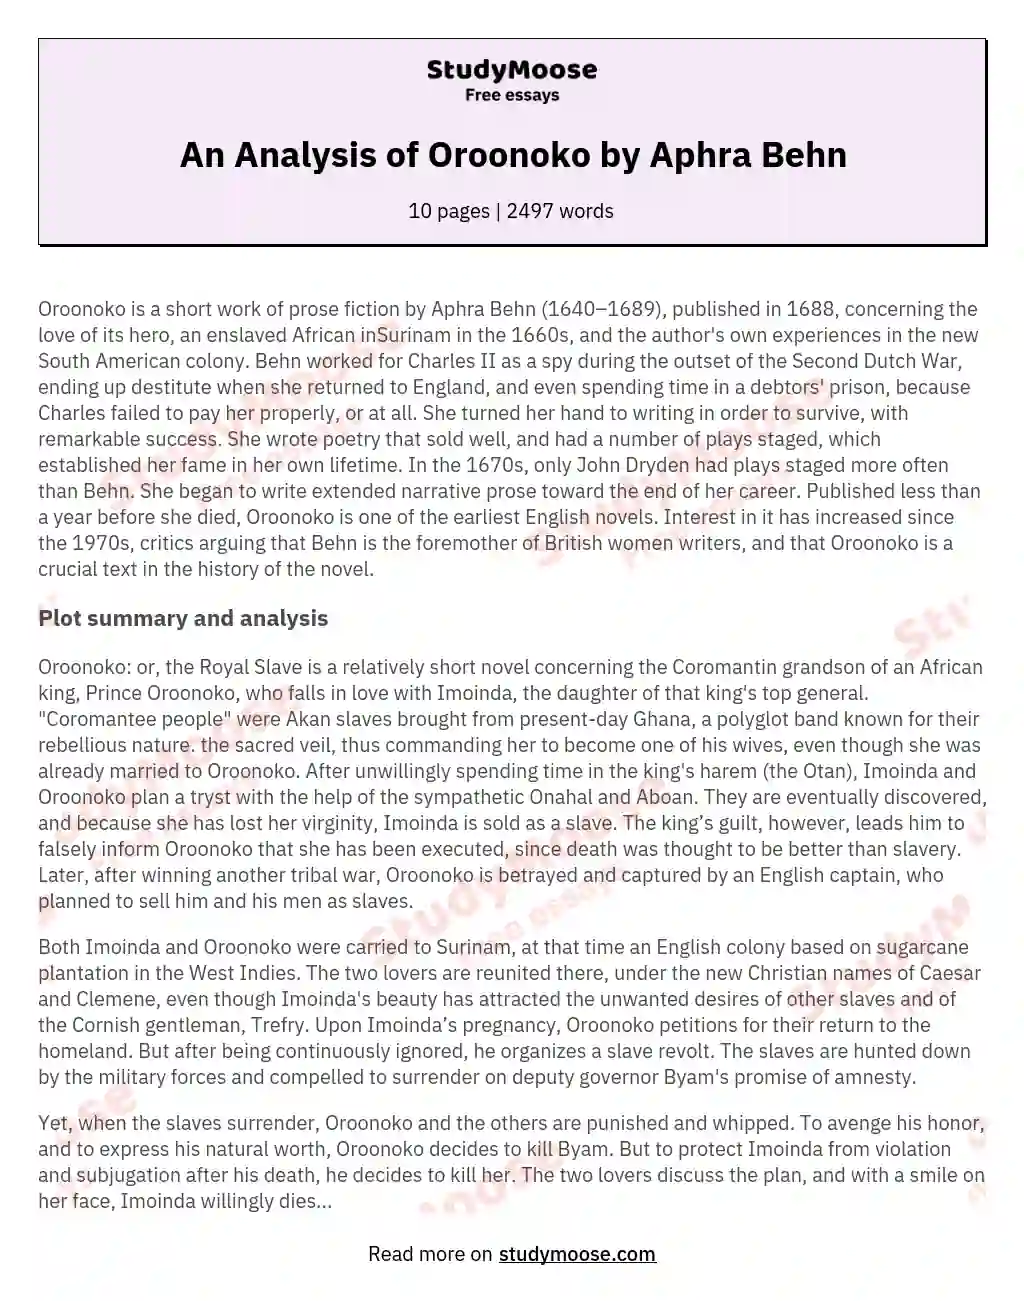 An Analysis of Oroonoko by Aphra Behn essay